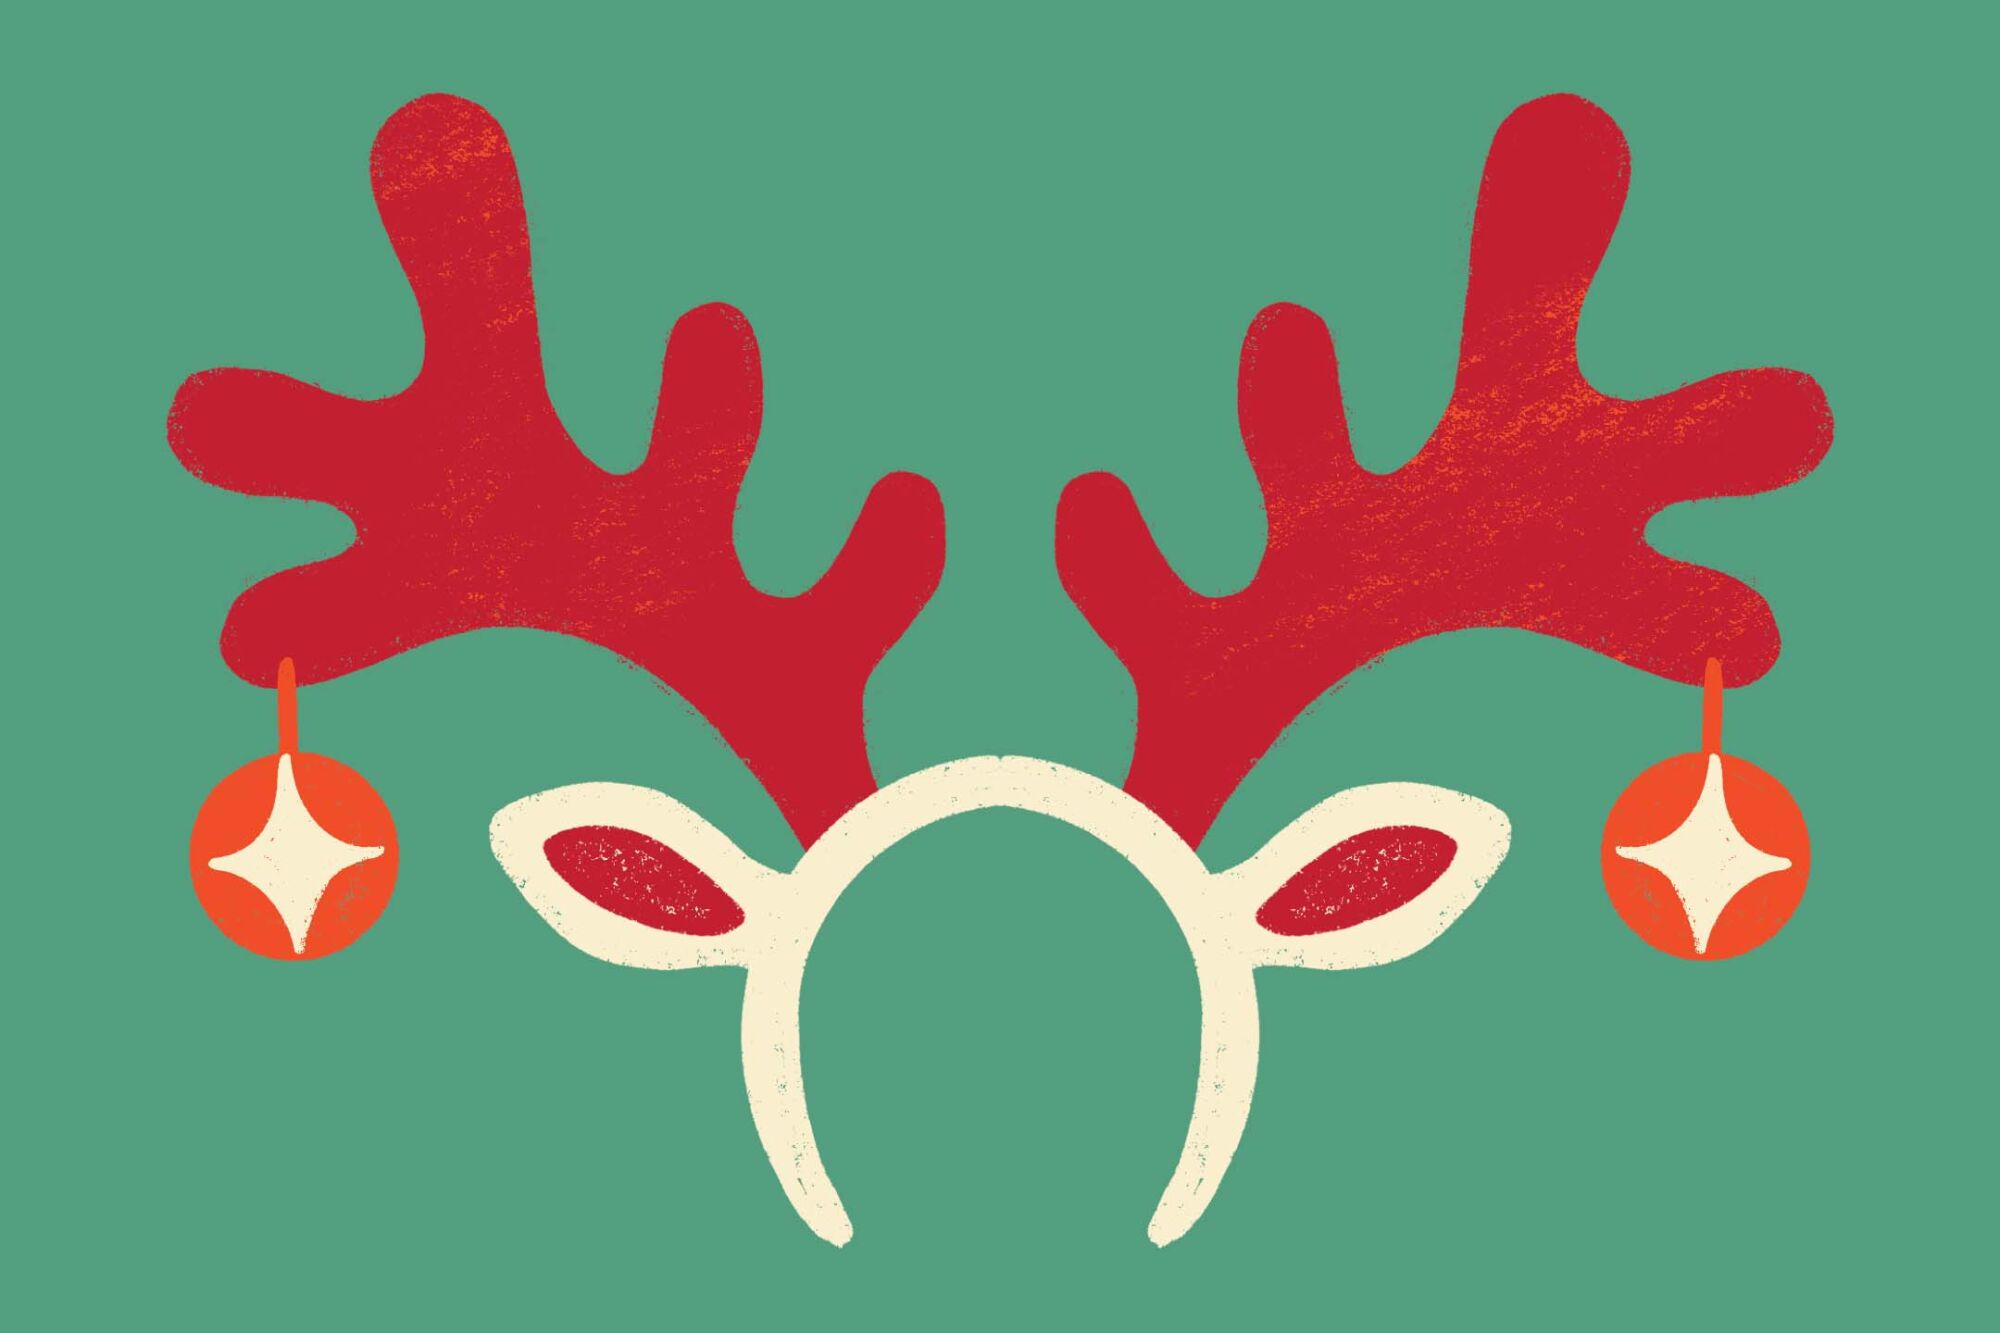 Illustration of reindeer antlers